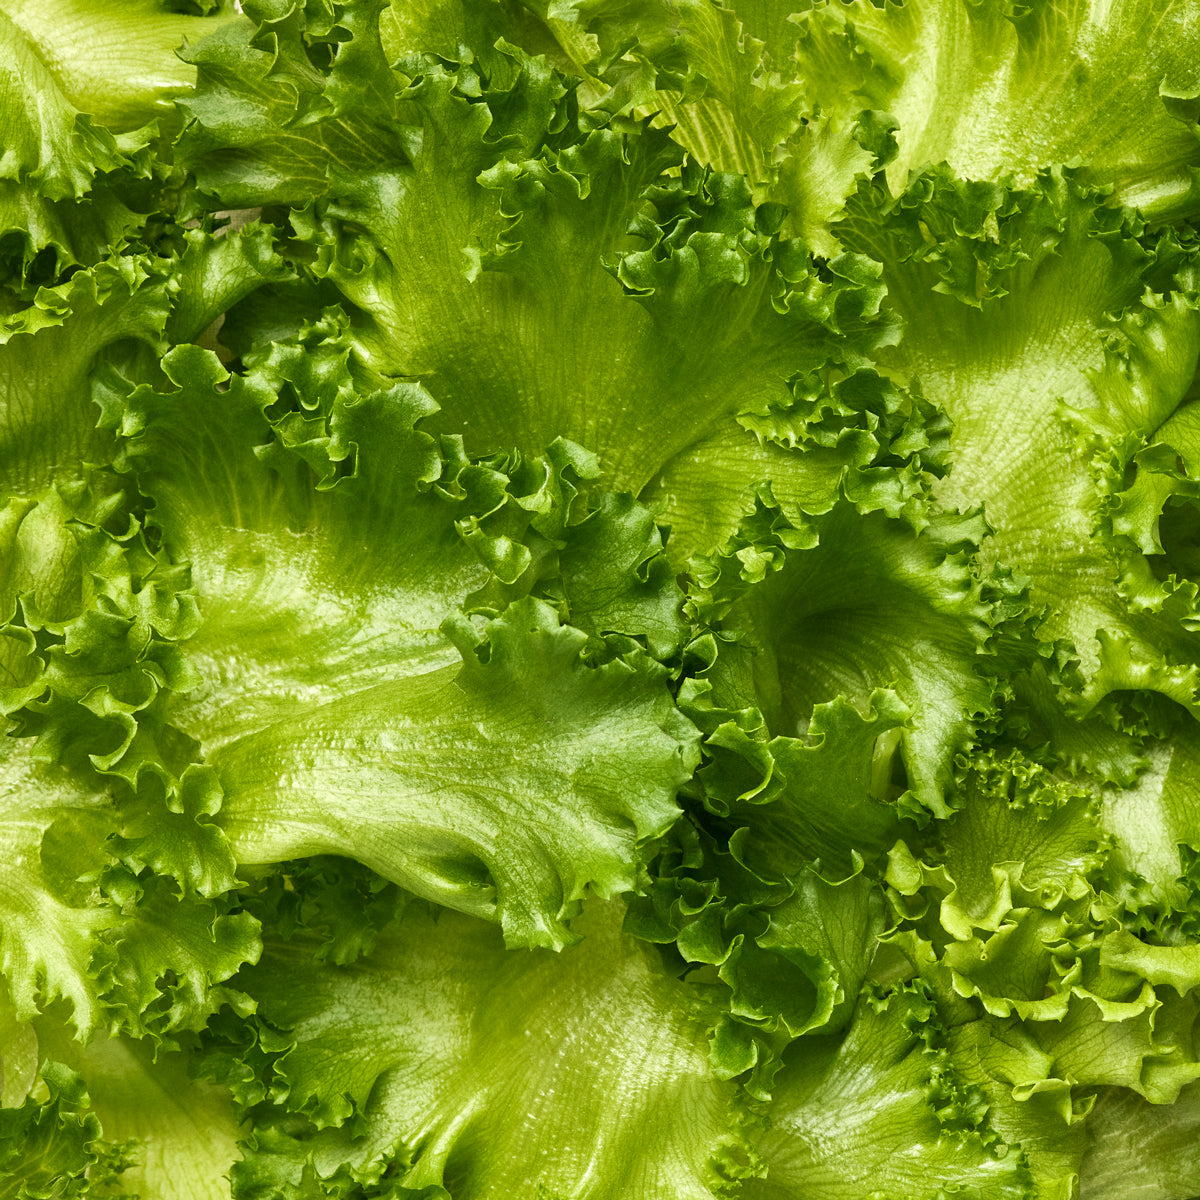 Gotham Greens Crispy Green Leaf Lettuce 2.5 lb